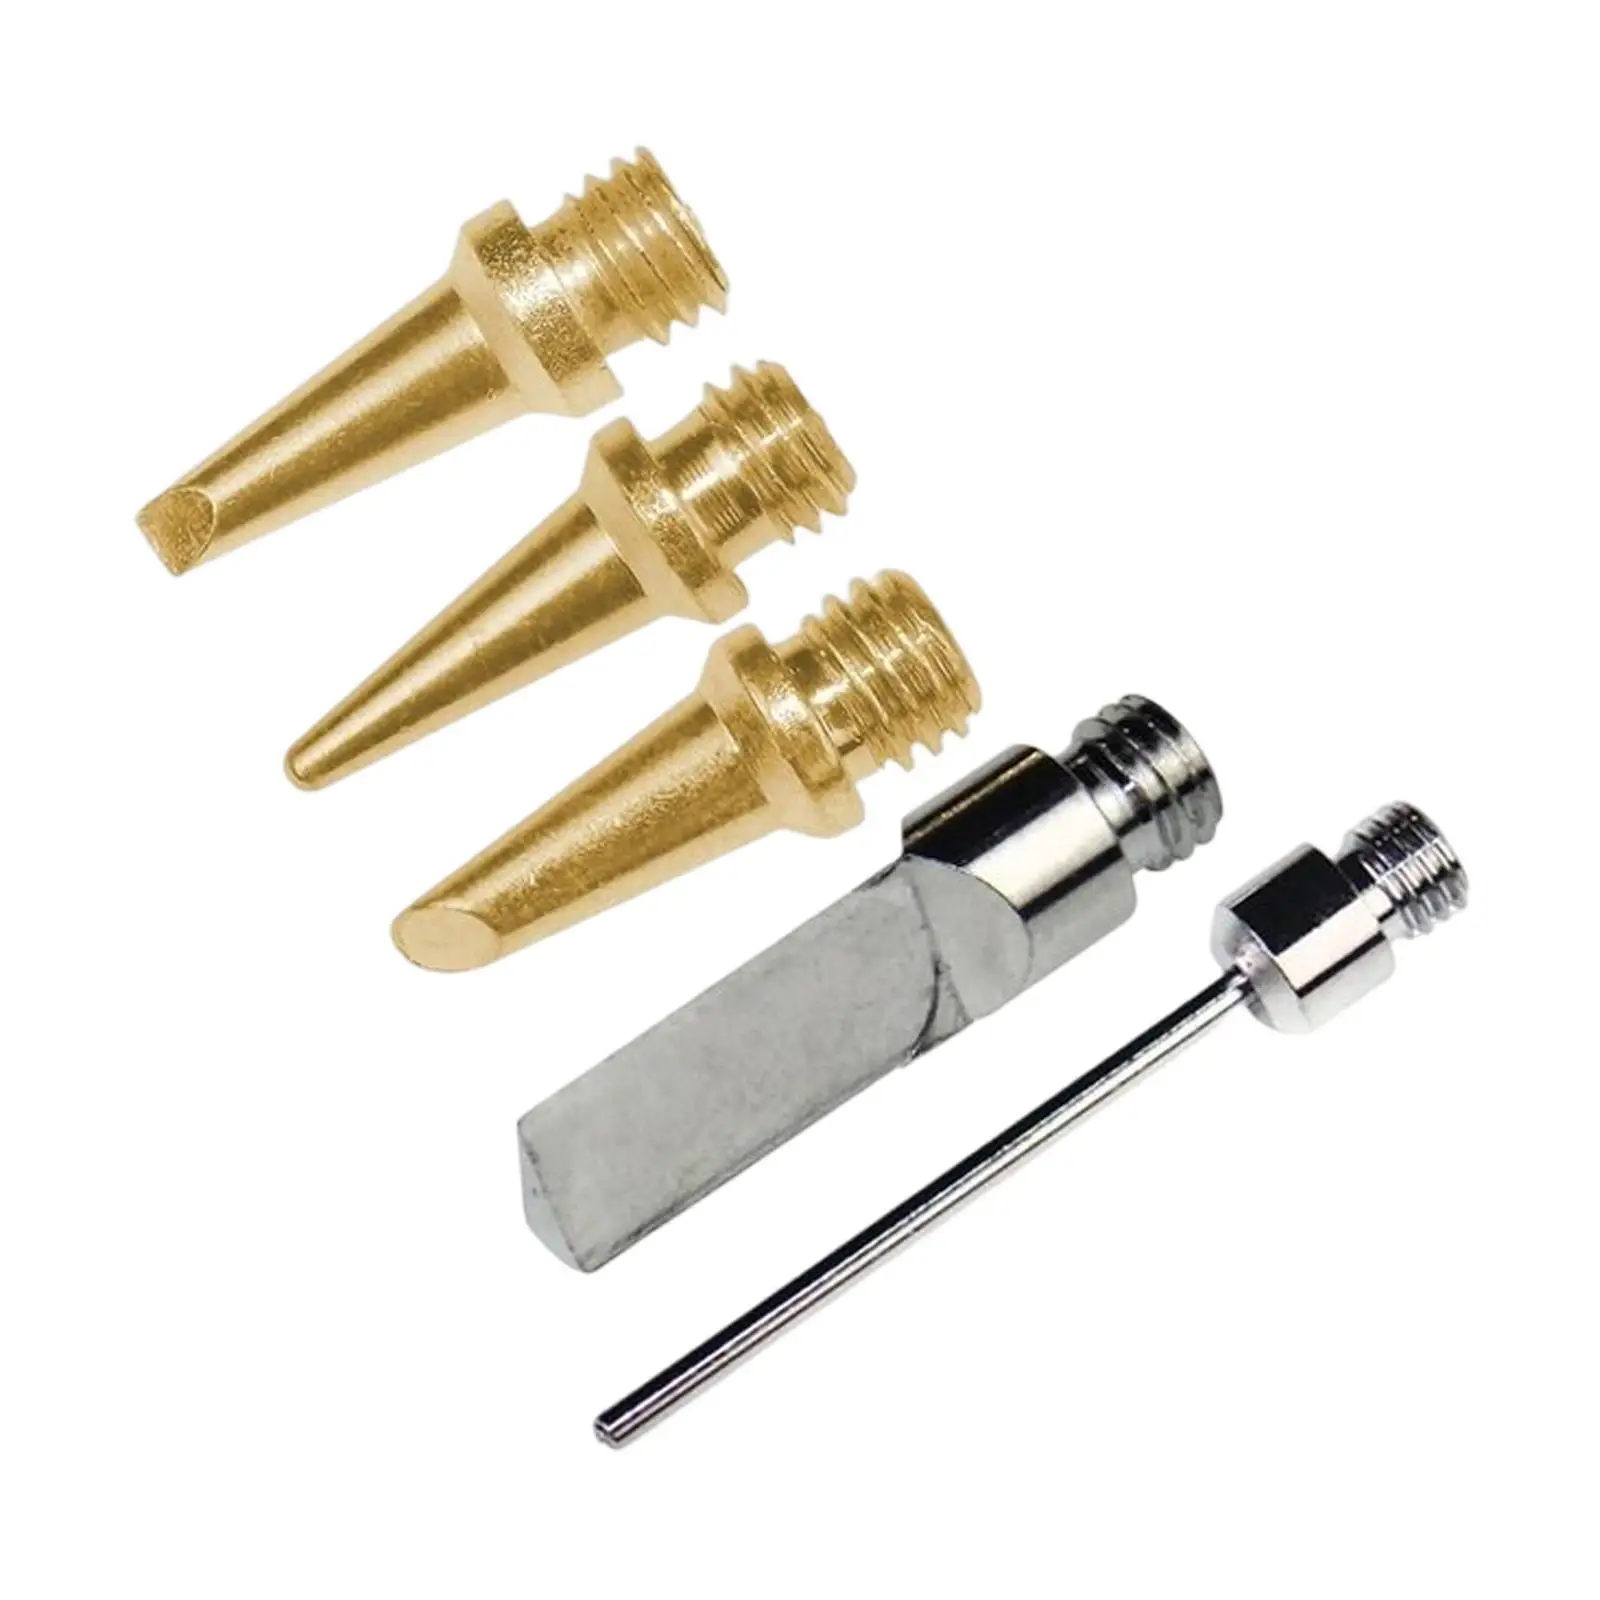 5x Metal Gas Soldering Iron Welding Torch Kit Accessories Torch Pen Tool